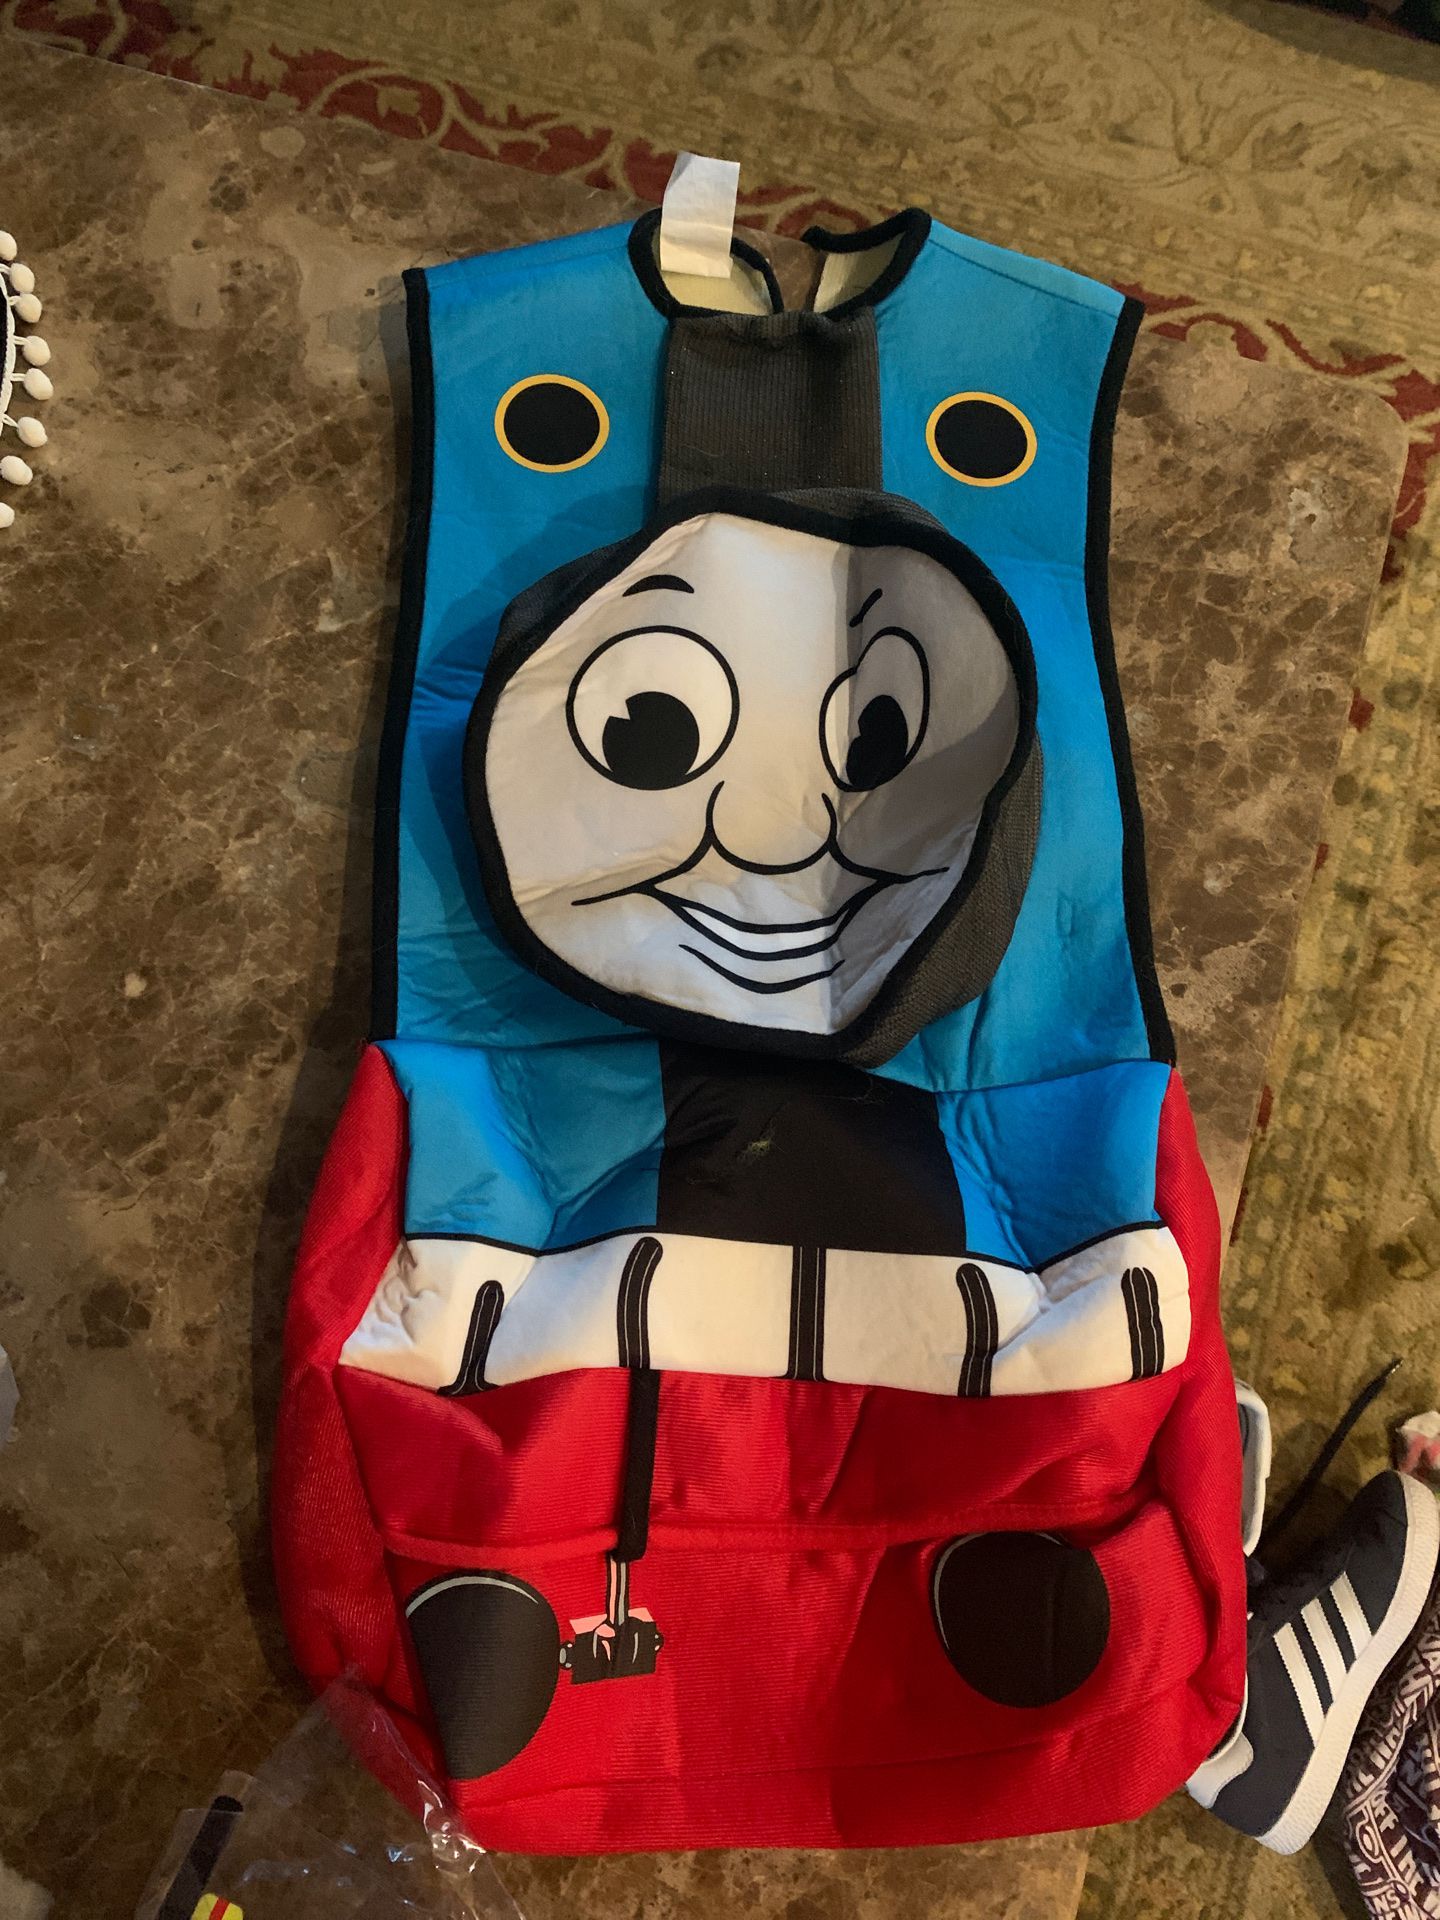 Thomas the train toddler costume